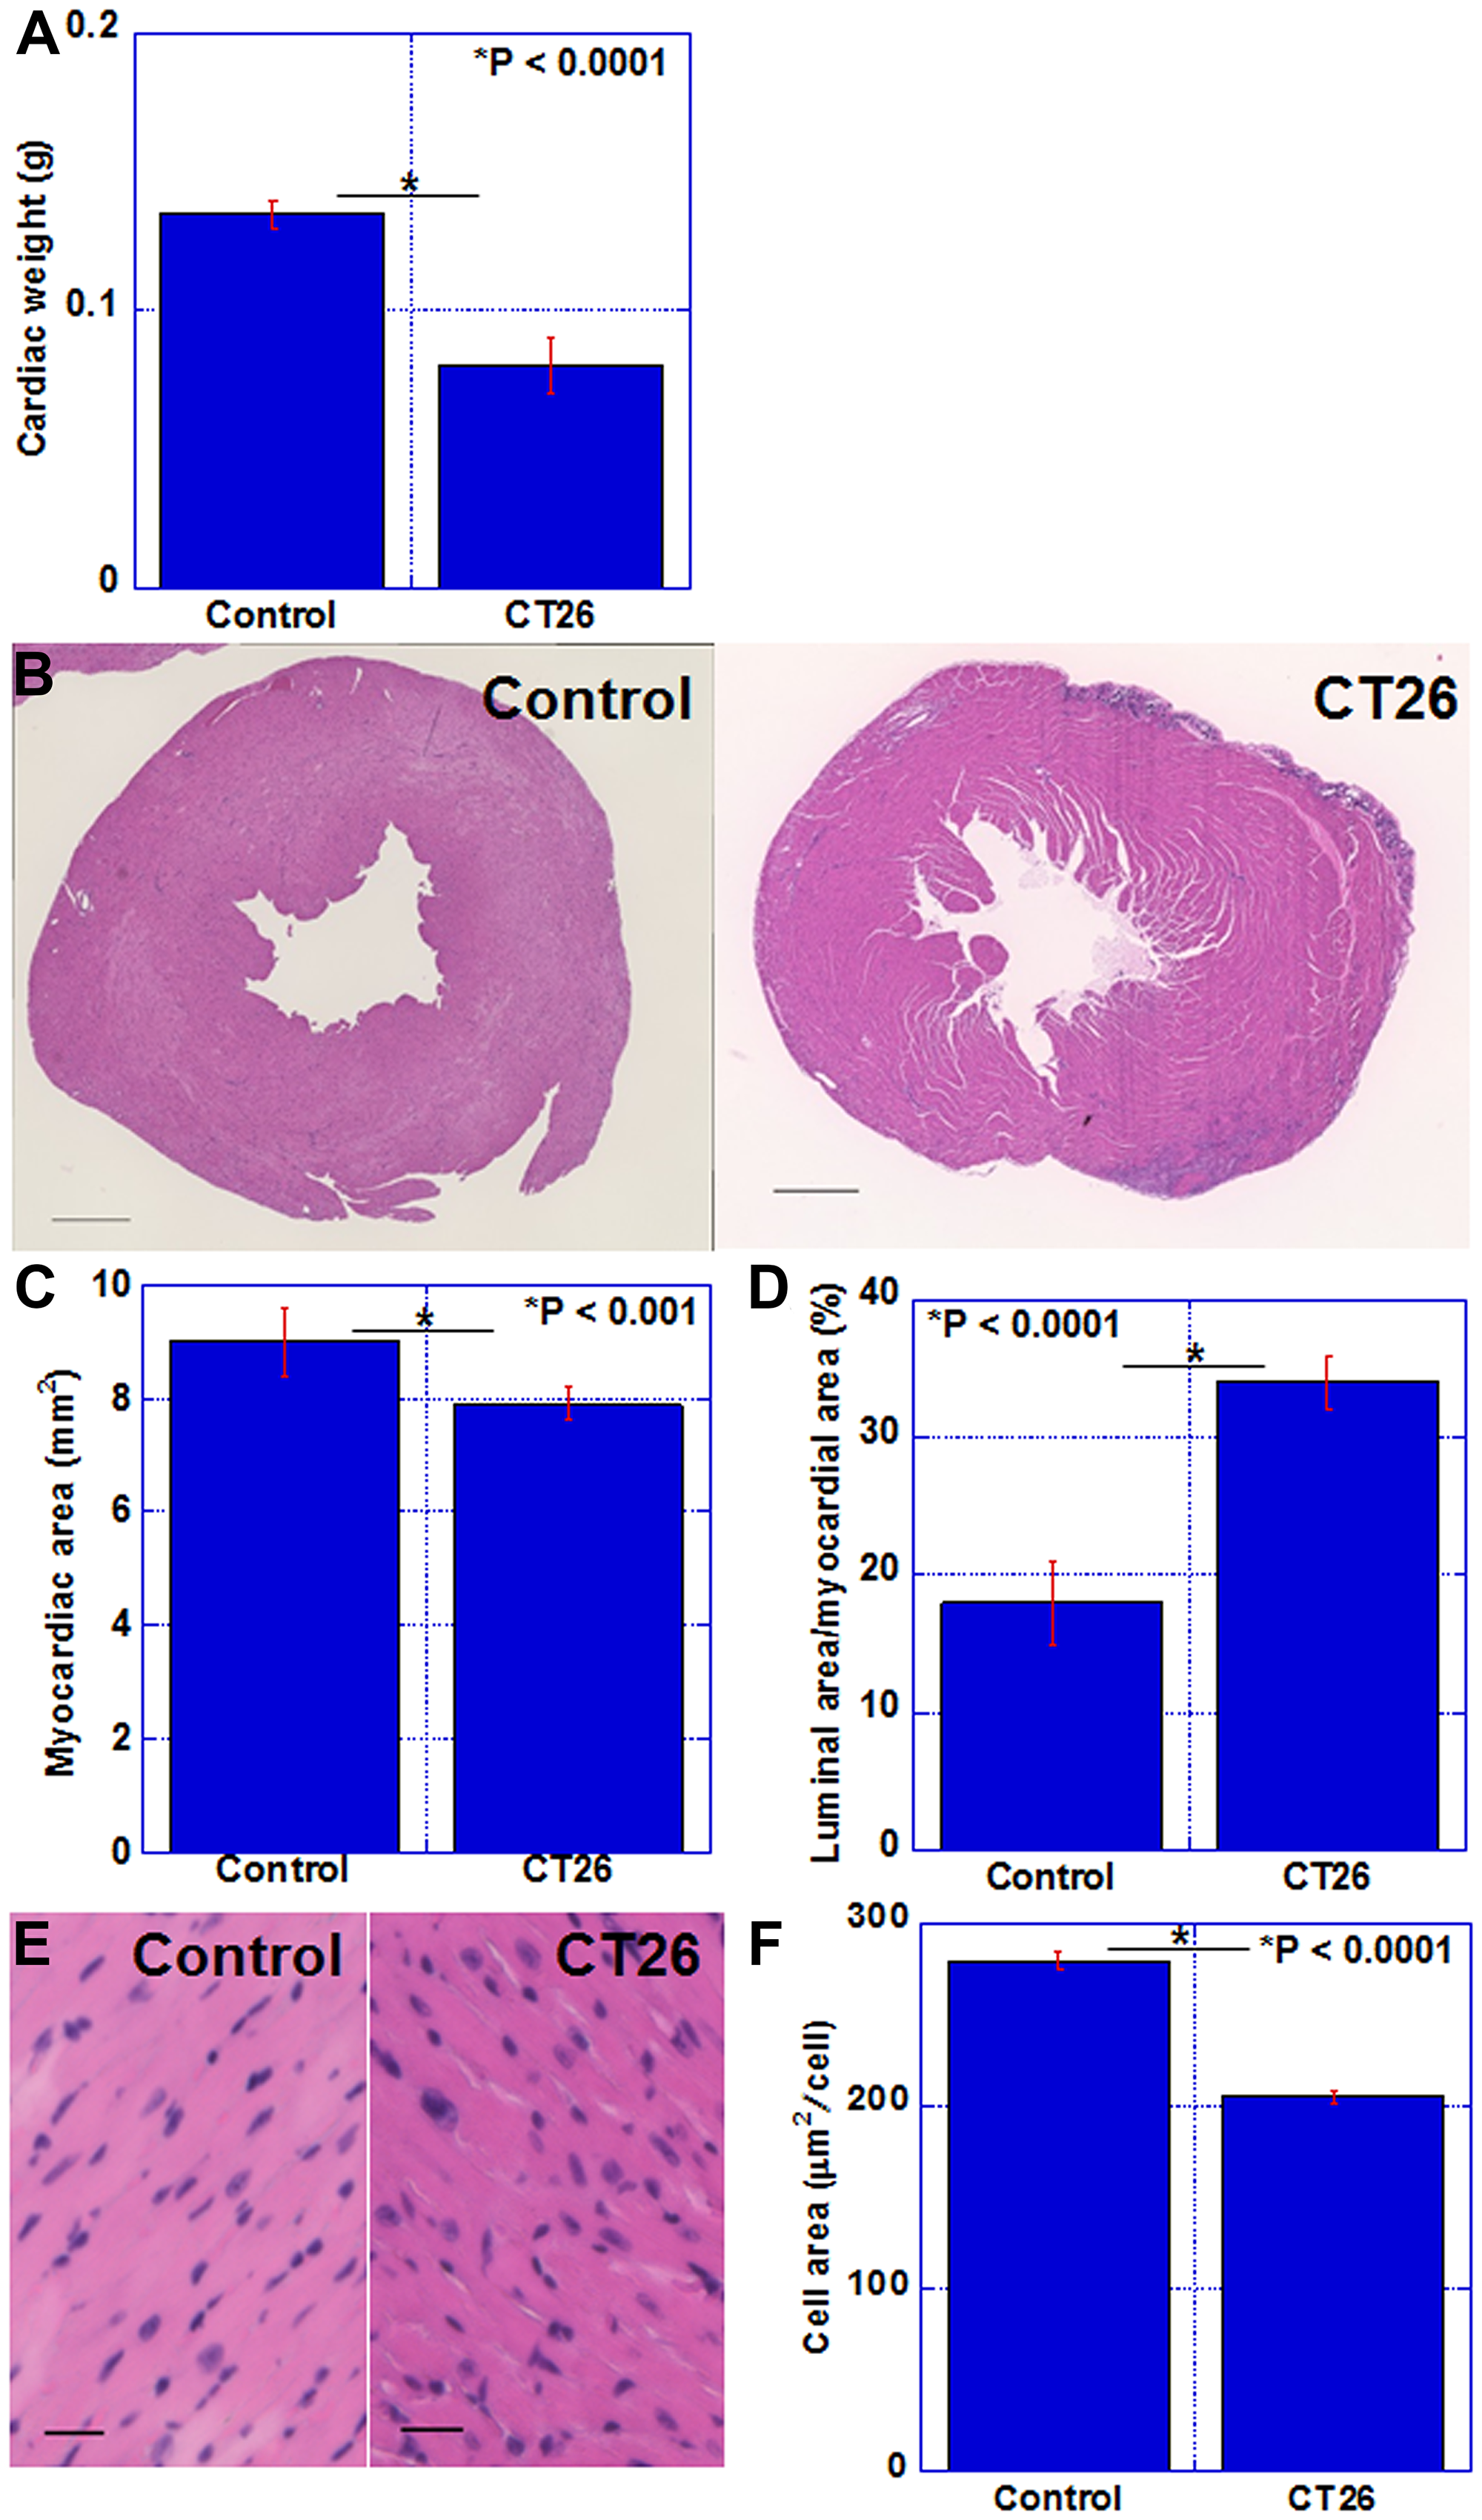 Alterations in the myocardium of CT26-inoculated BALB/c mice.